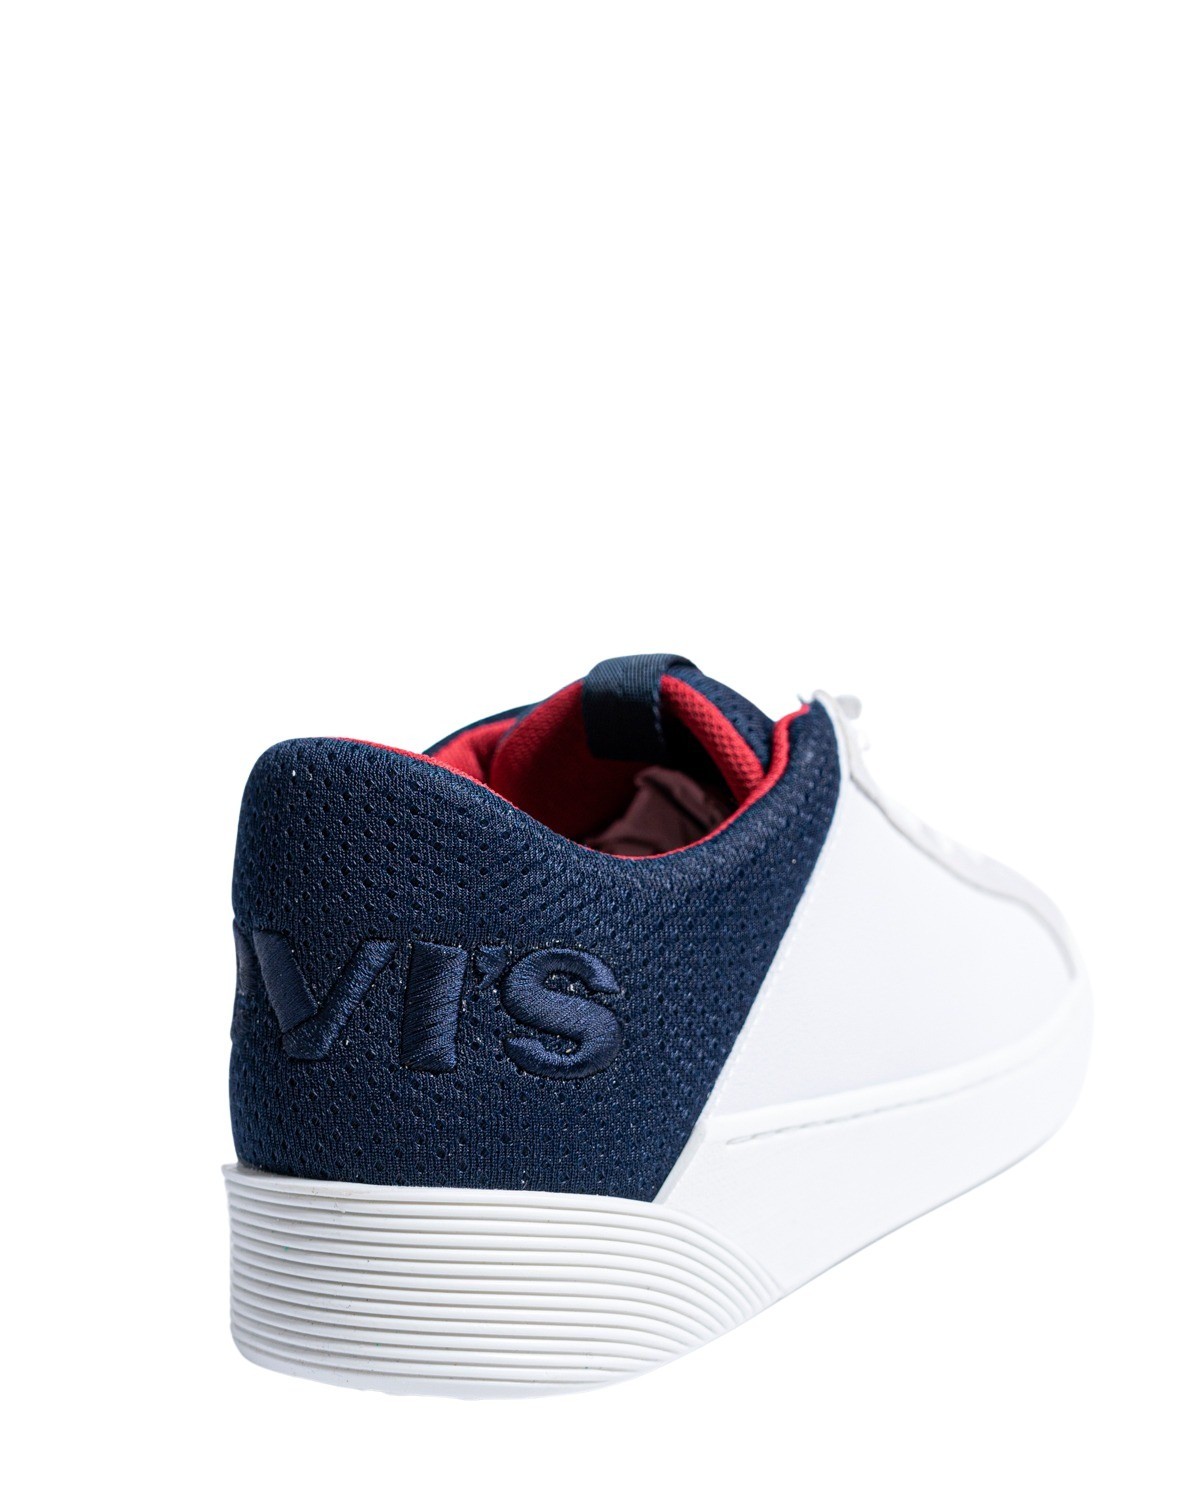 chaussures homme LEVI'S sneakers bleu textile GR45261 - ZOOODE.COM